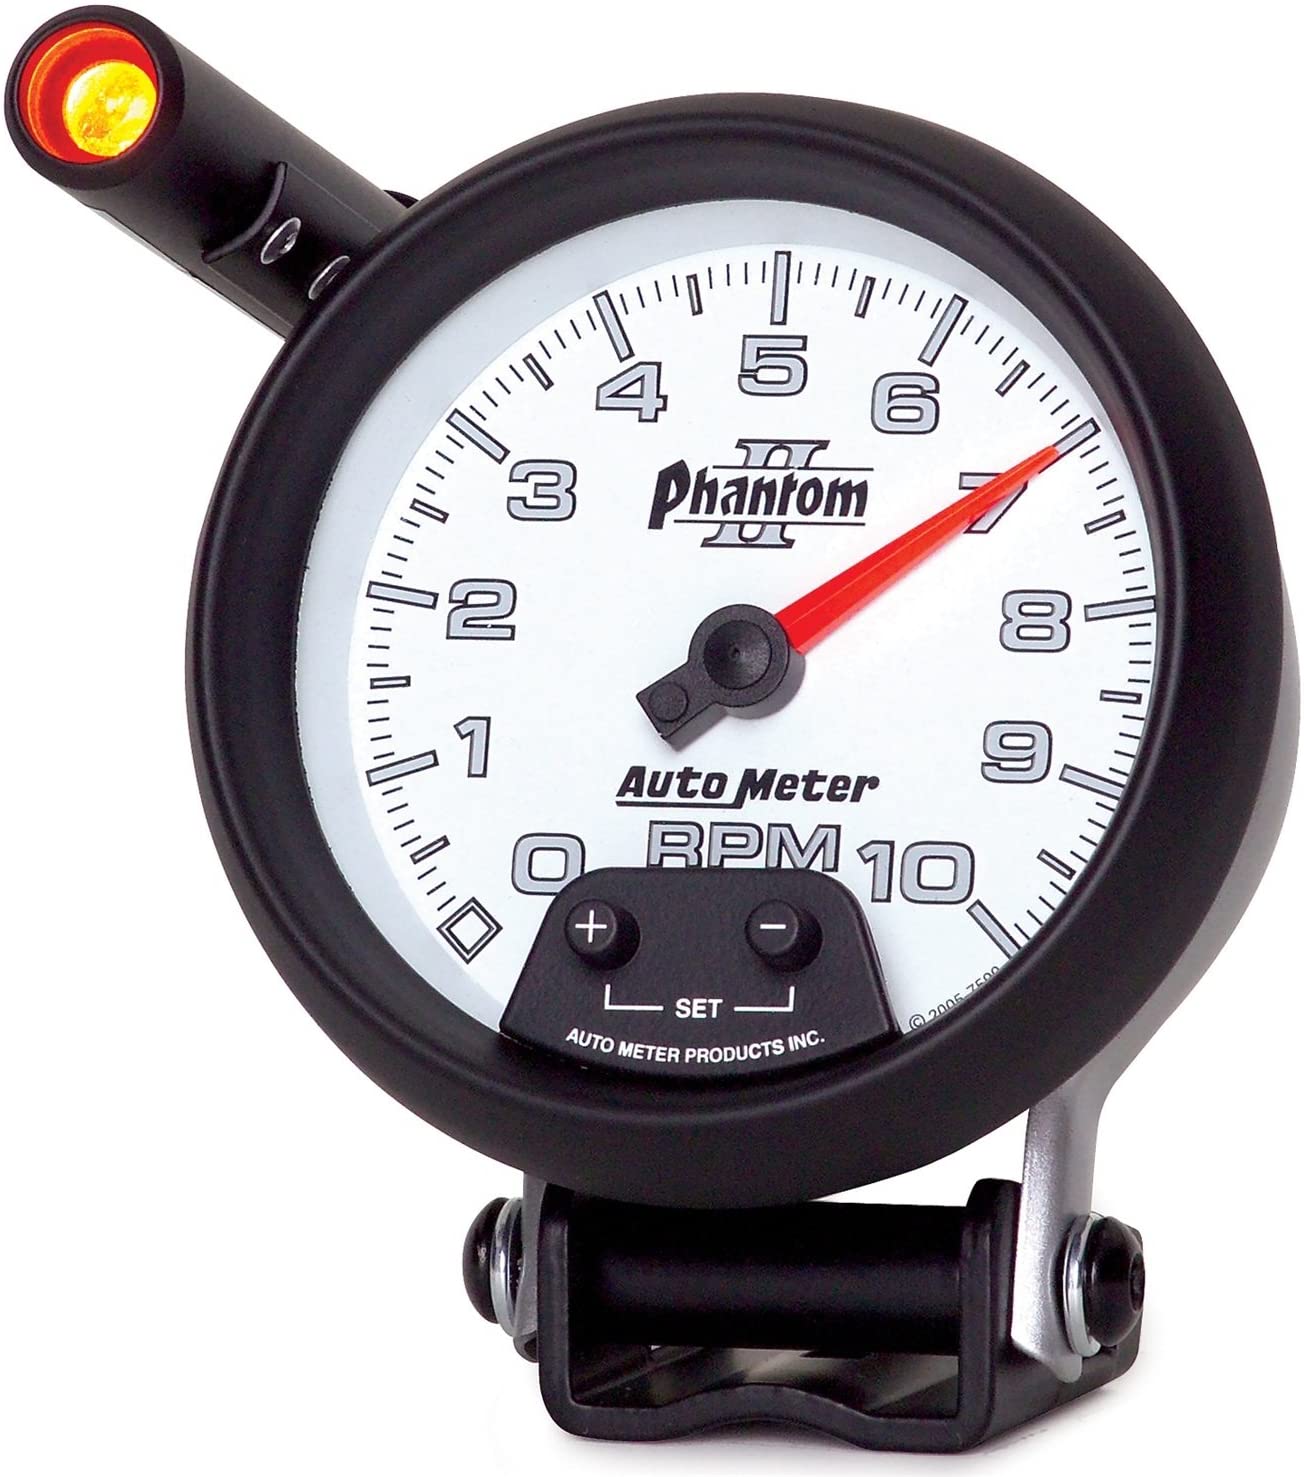 Auto Meter 7590 Phantom II Pedestal Mount Mini-Monster Tachometer